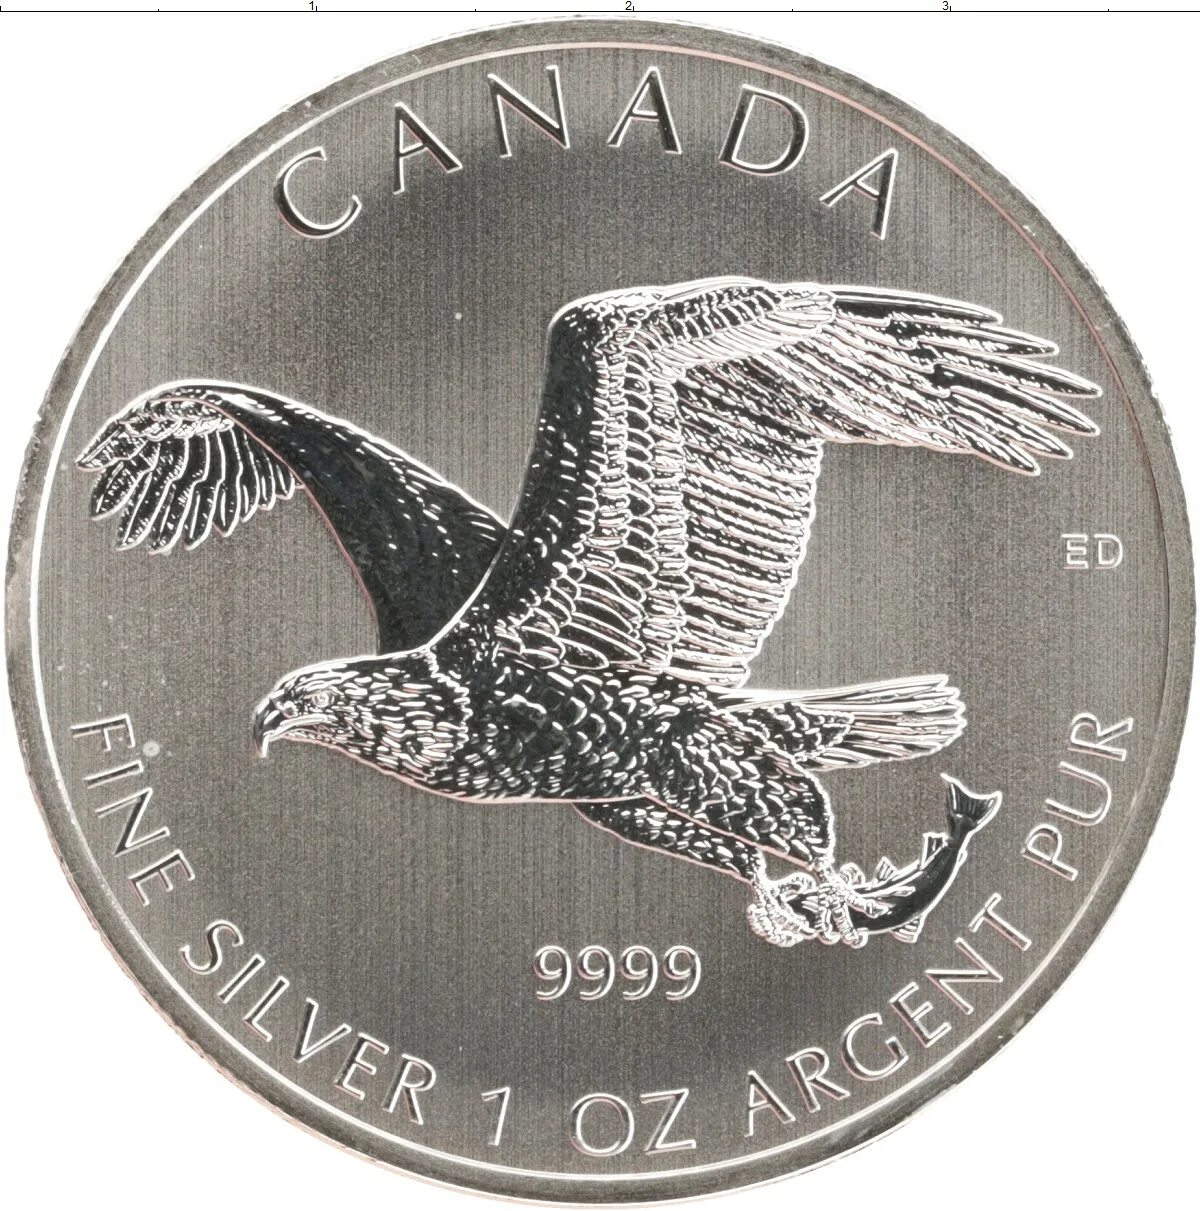 116 долларов в рублях. Монета Канада 5 долларов 2014 Коршун серебро. 5 Канадских долларов. 5 Долларов Канада 2014. Канадский доллар 5 долларов монета.